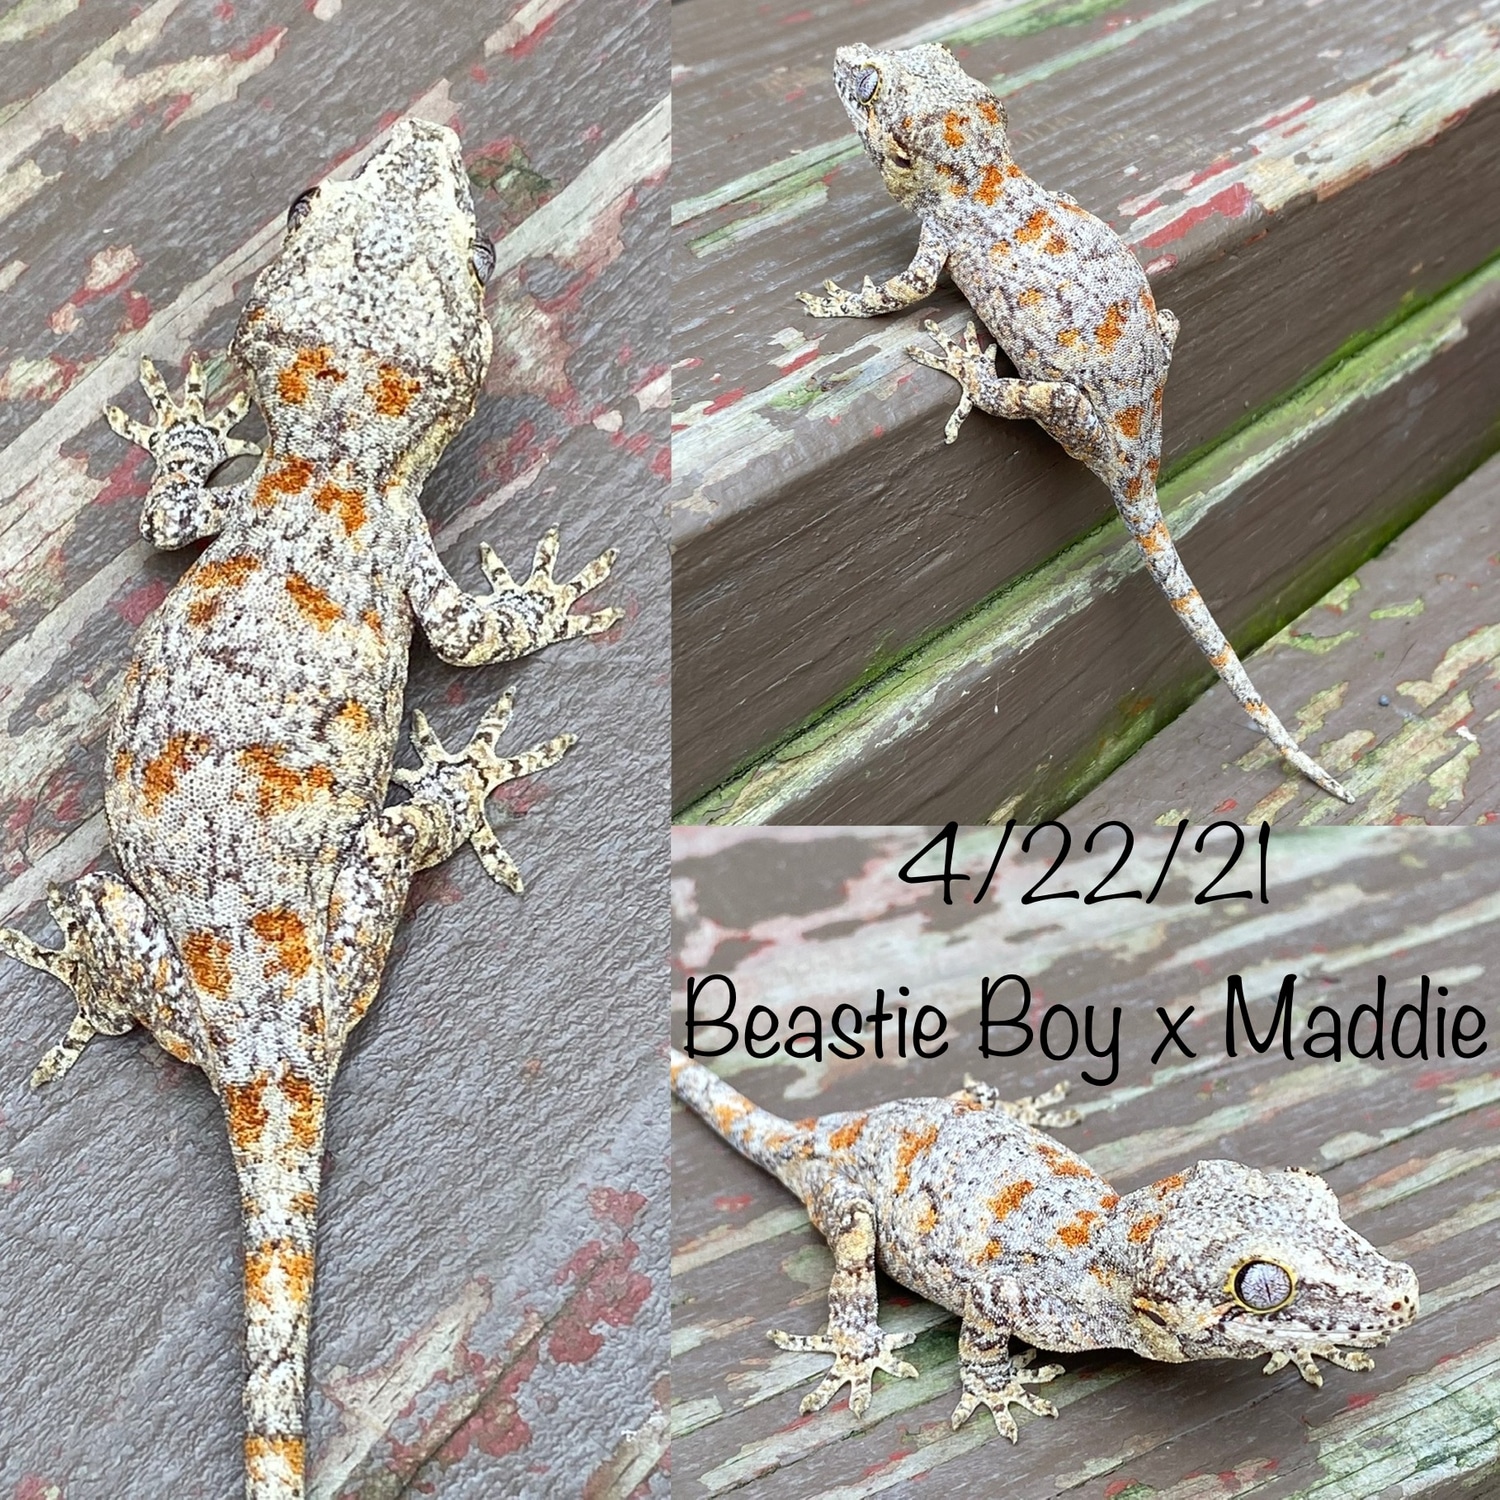 Beastie Boy X Maddie Orange Spot Gargoyle Gargoyle Gecko by Nature Nut Reptiles